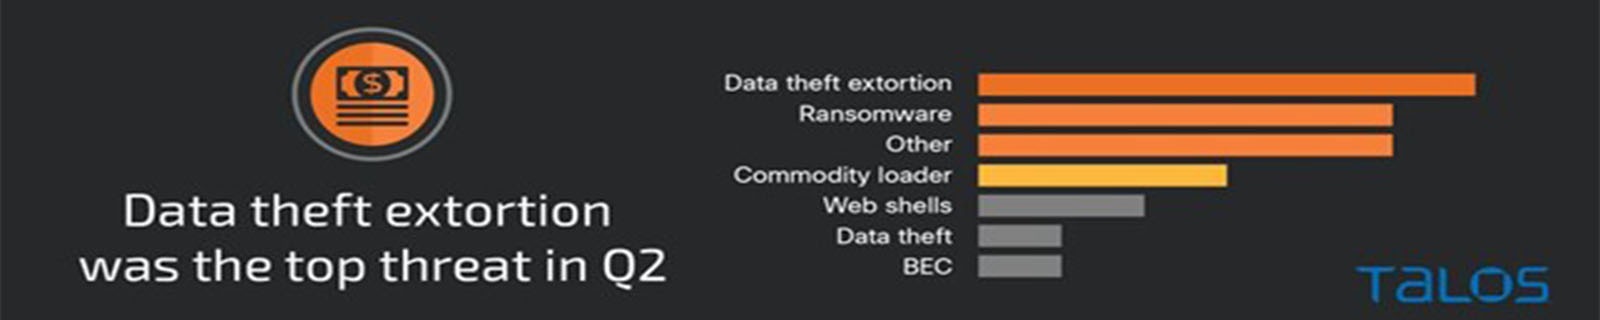 data-theft-1600x320